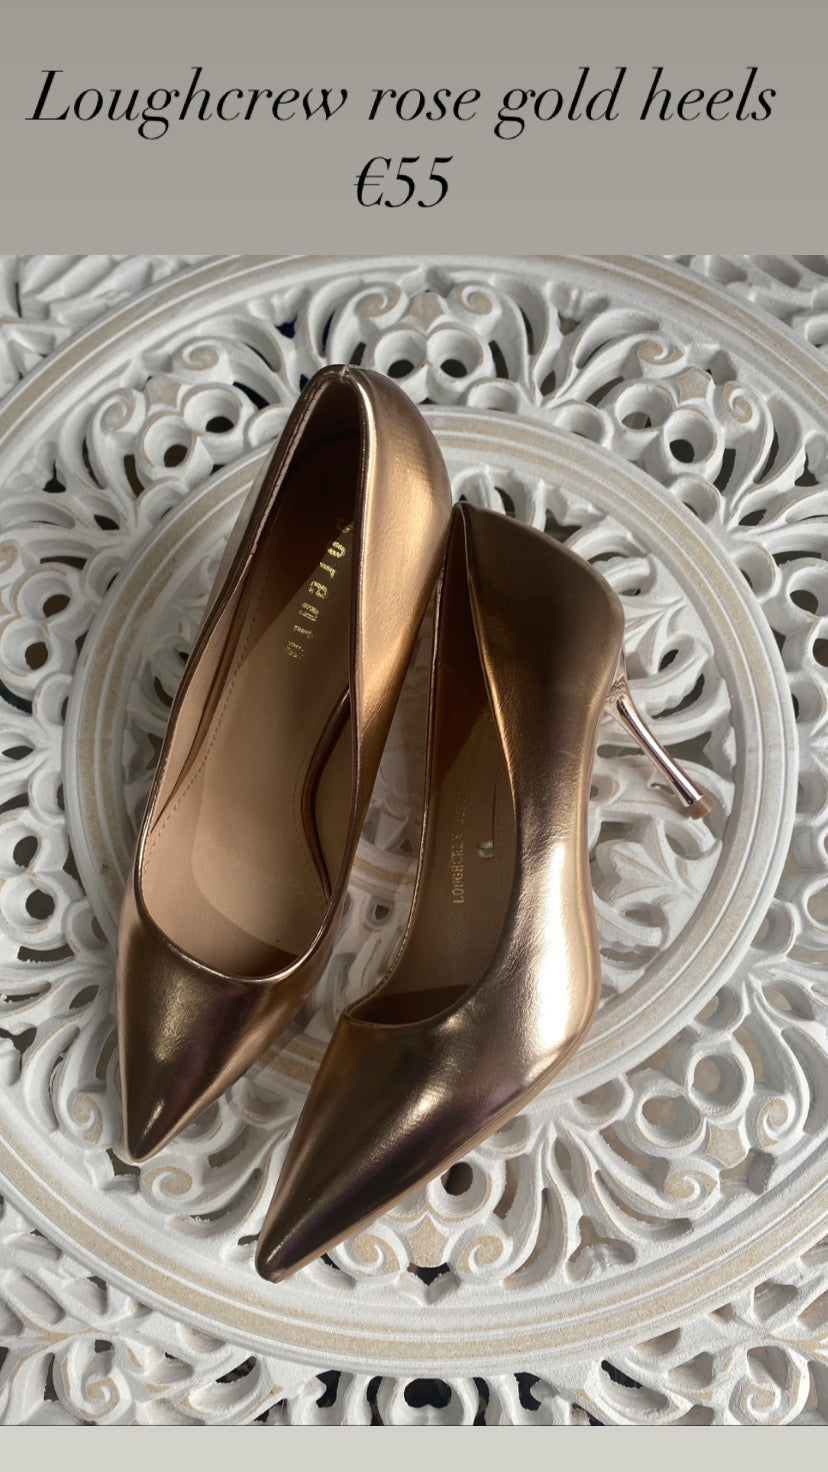 Loughcrew rose gold heels